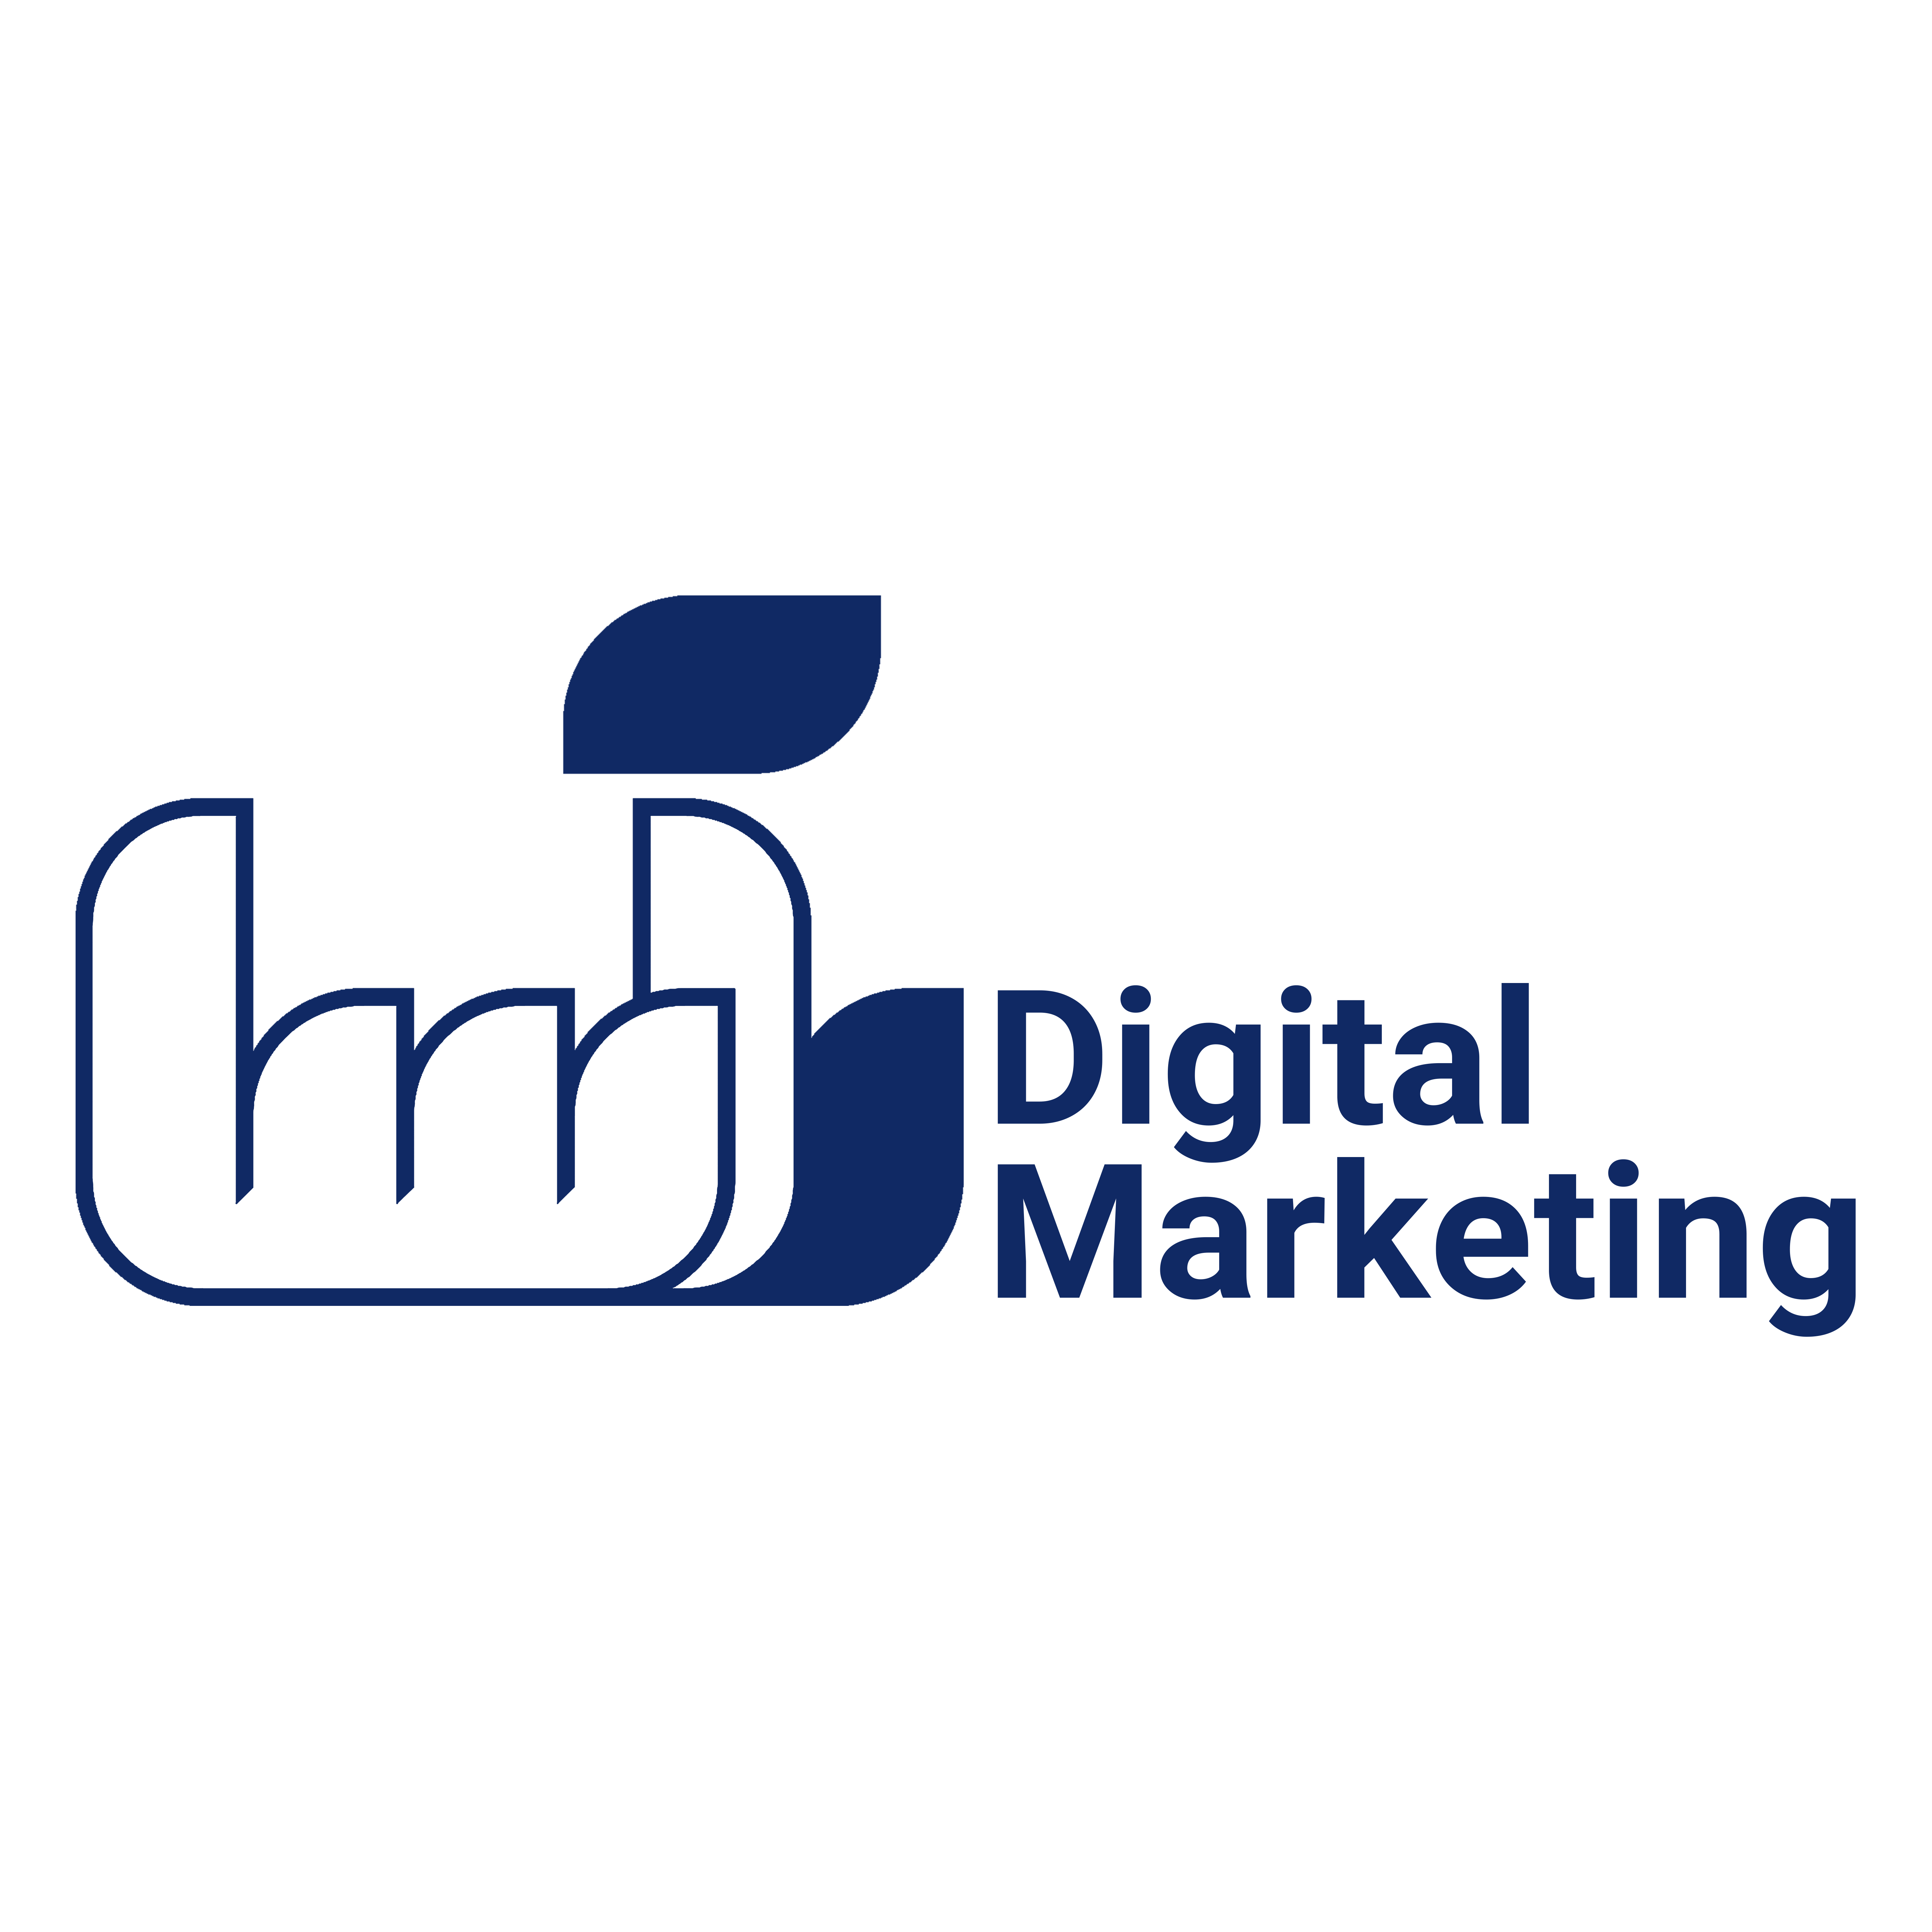 Rasa Digital Marketing Agency profile on Qualified.One